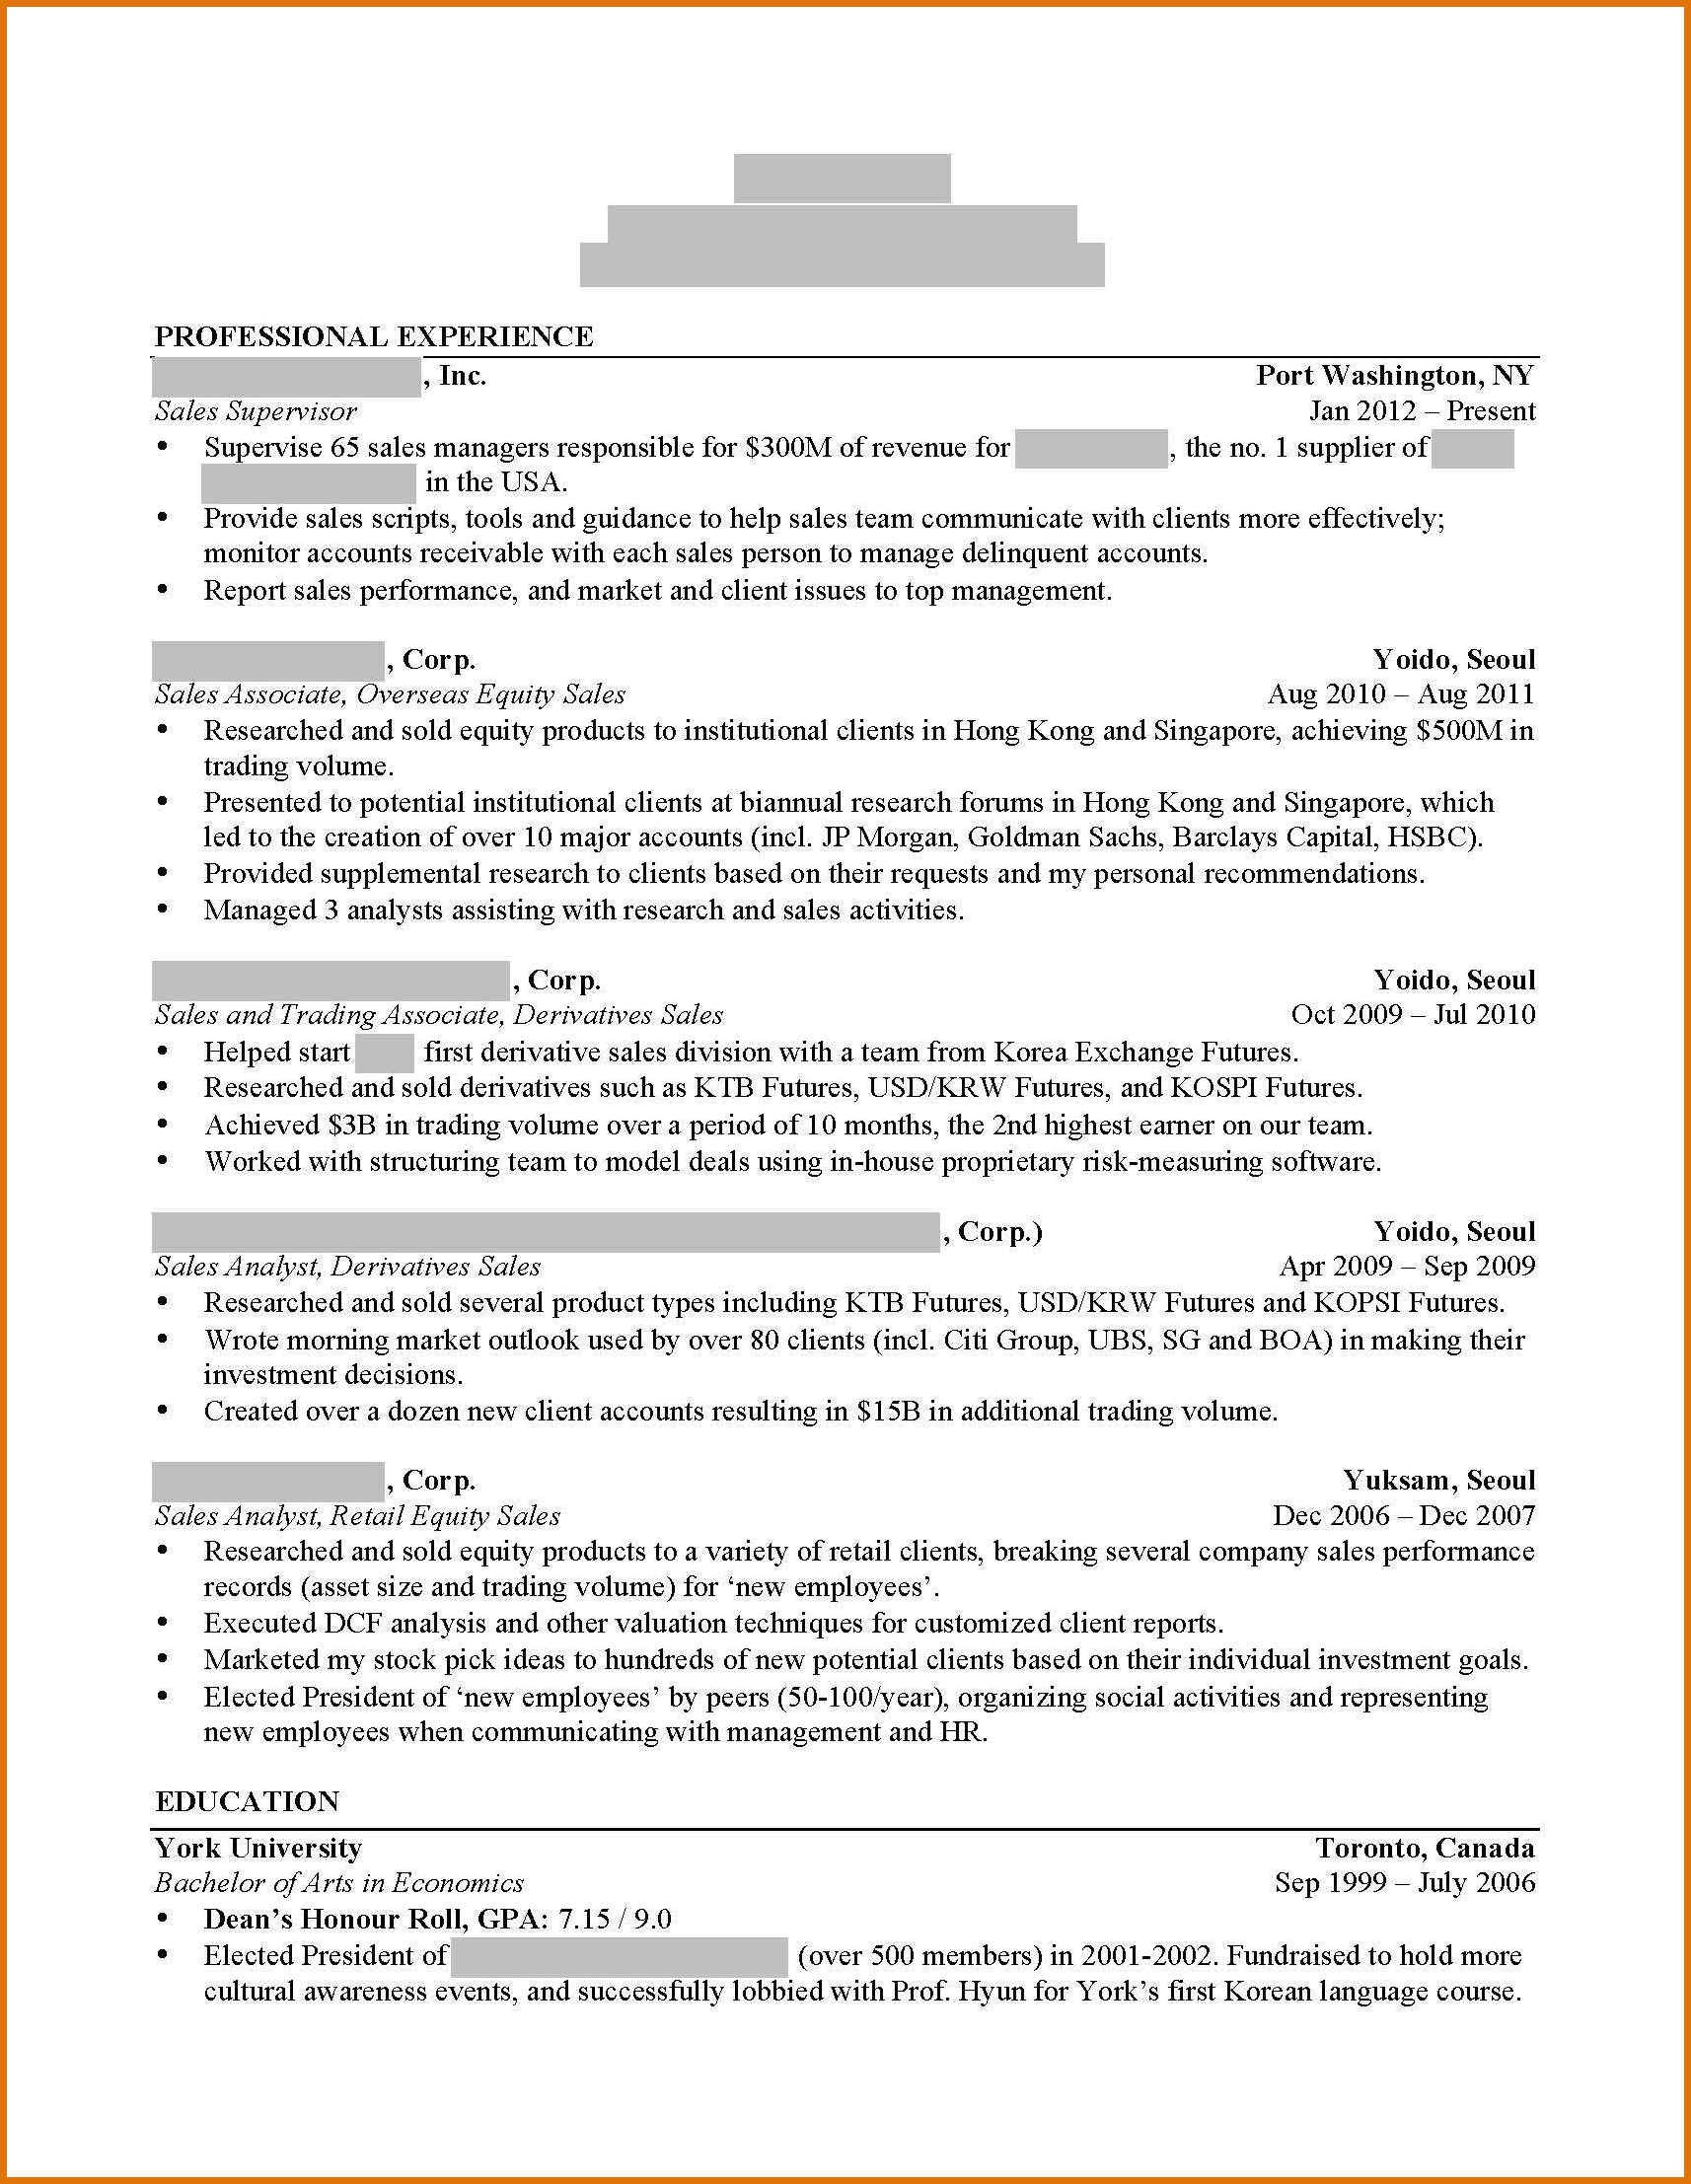 Resume Format Harvard Business School 